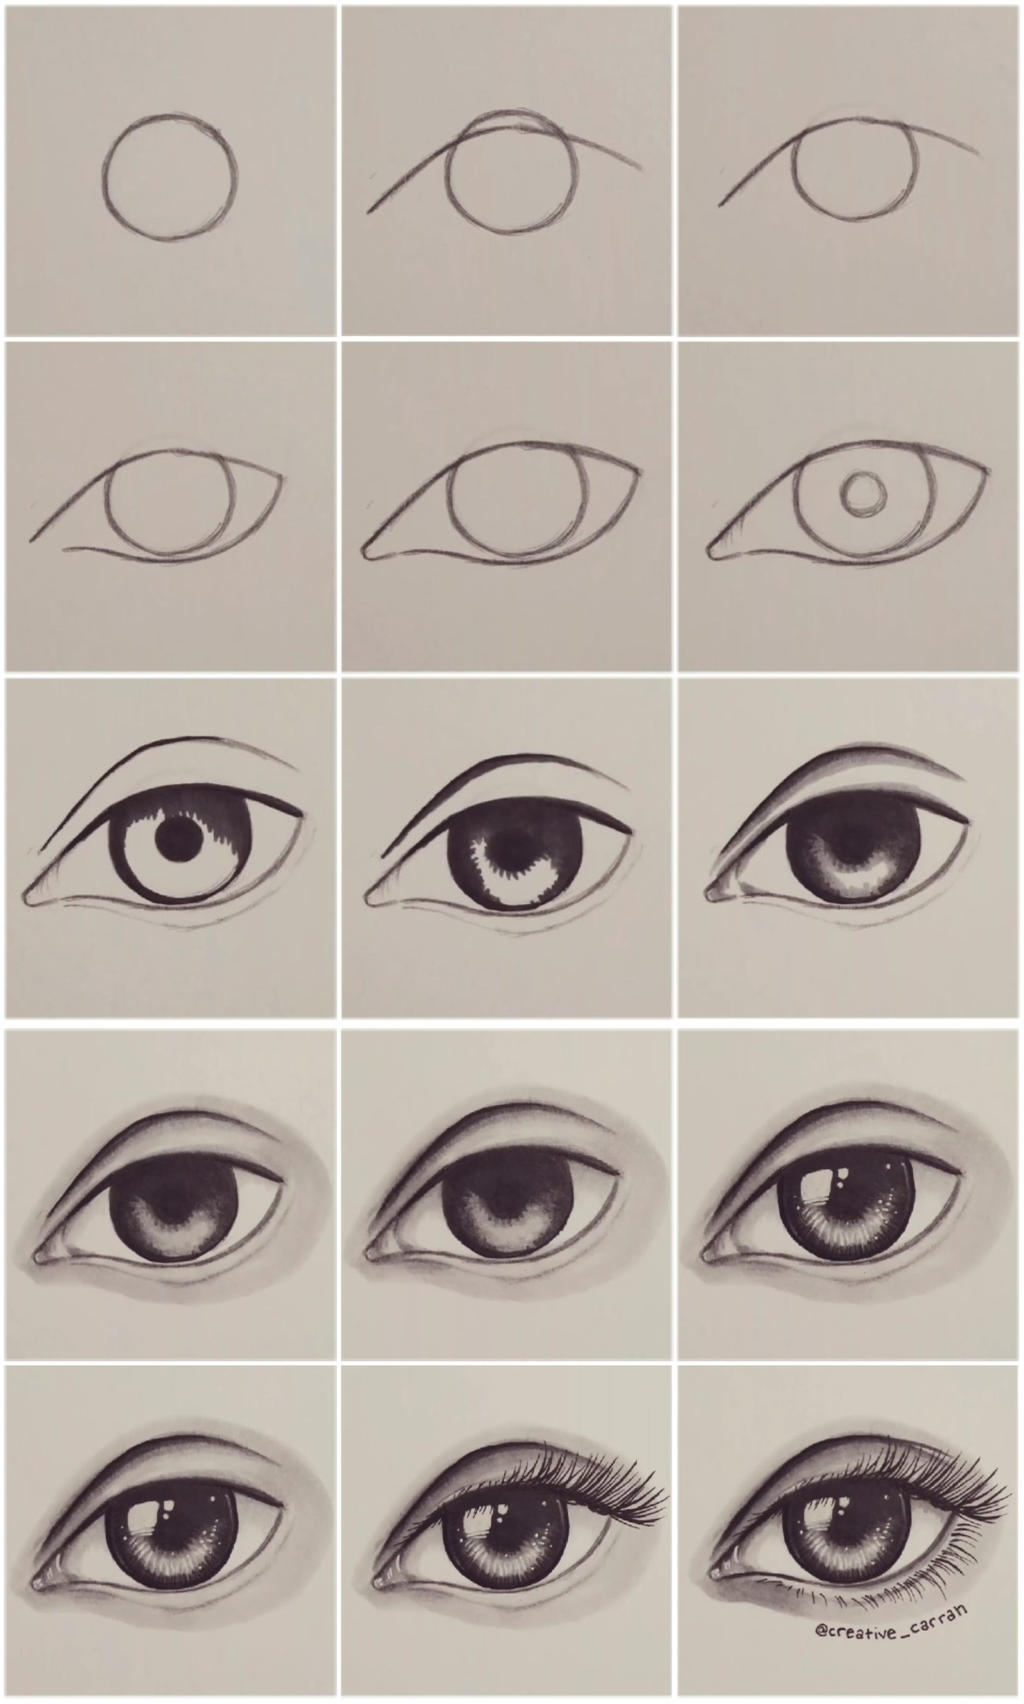 Eye Tutorial by CreativeCarrah on